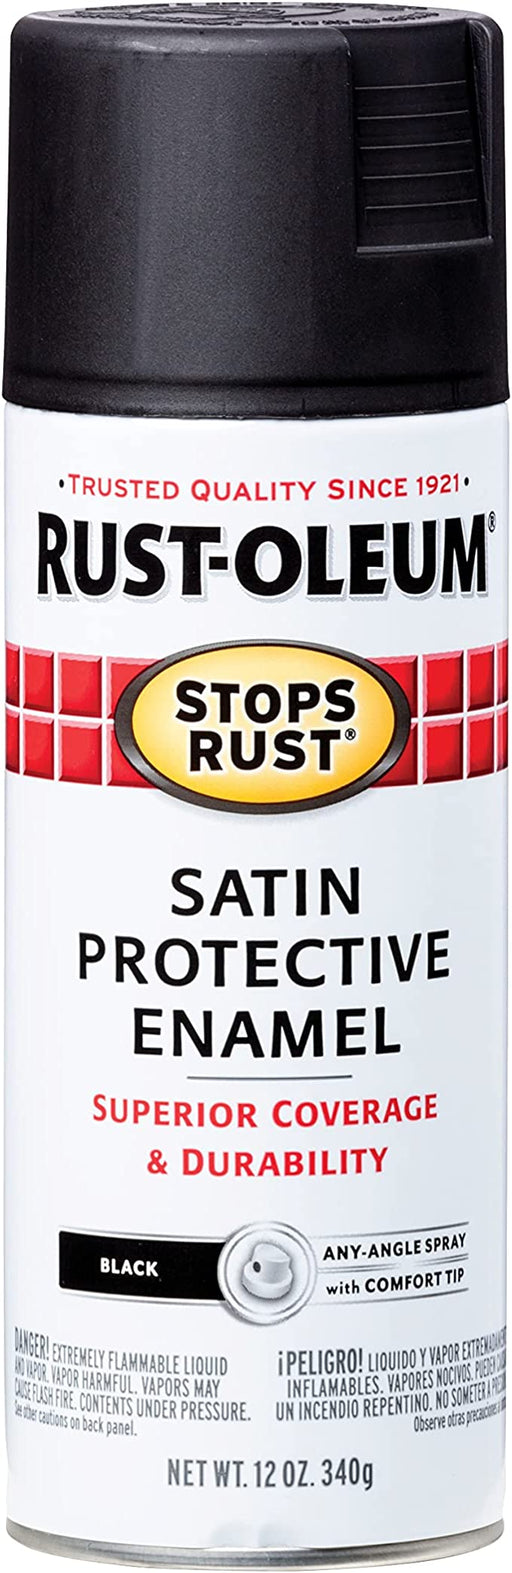 RUST-OLEUM 12 OZ Stops Rust Protective Enamel Spray Paint - Satin Black BLACK